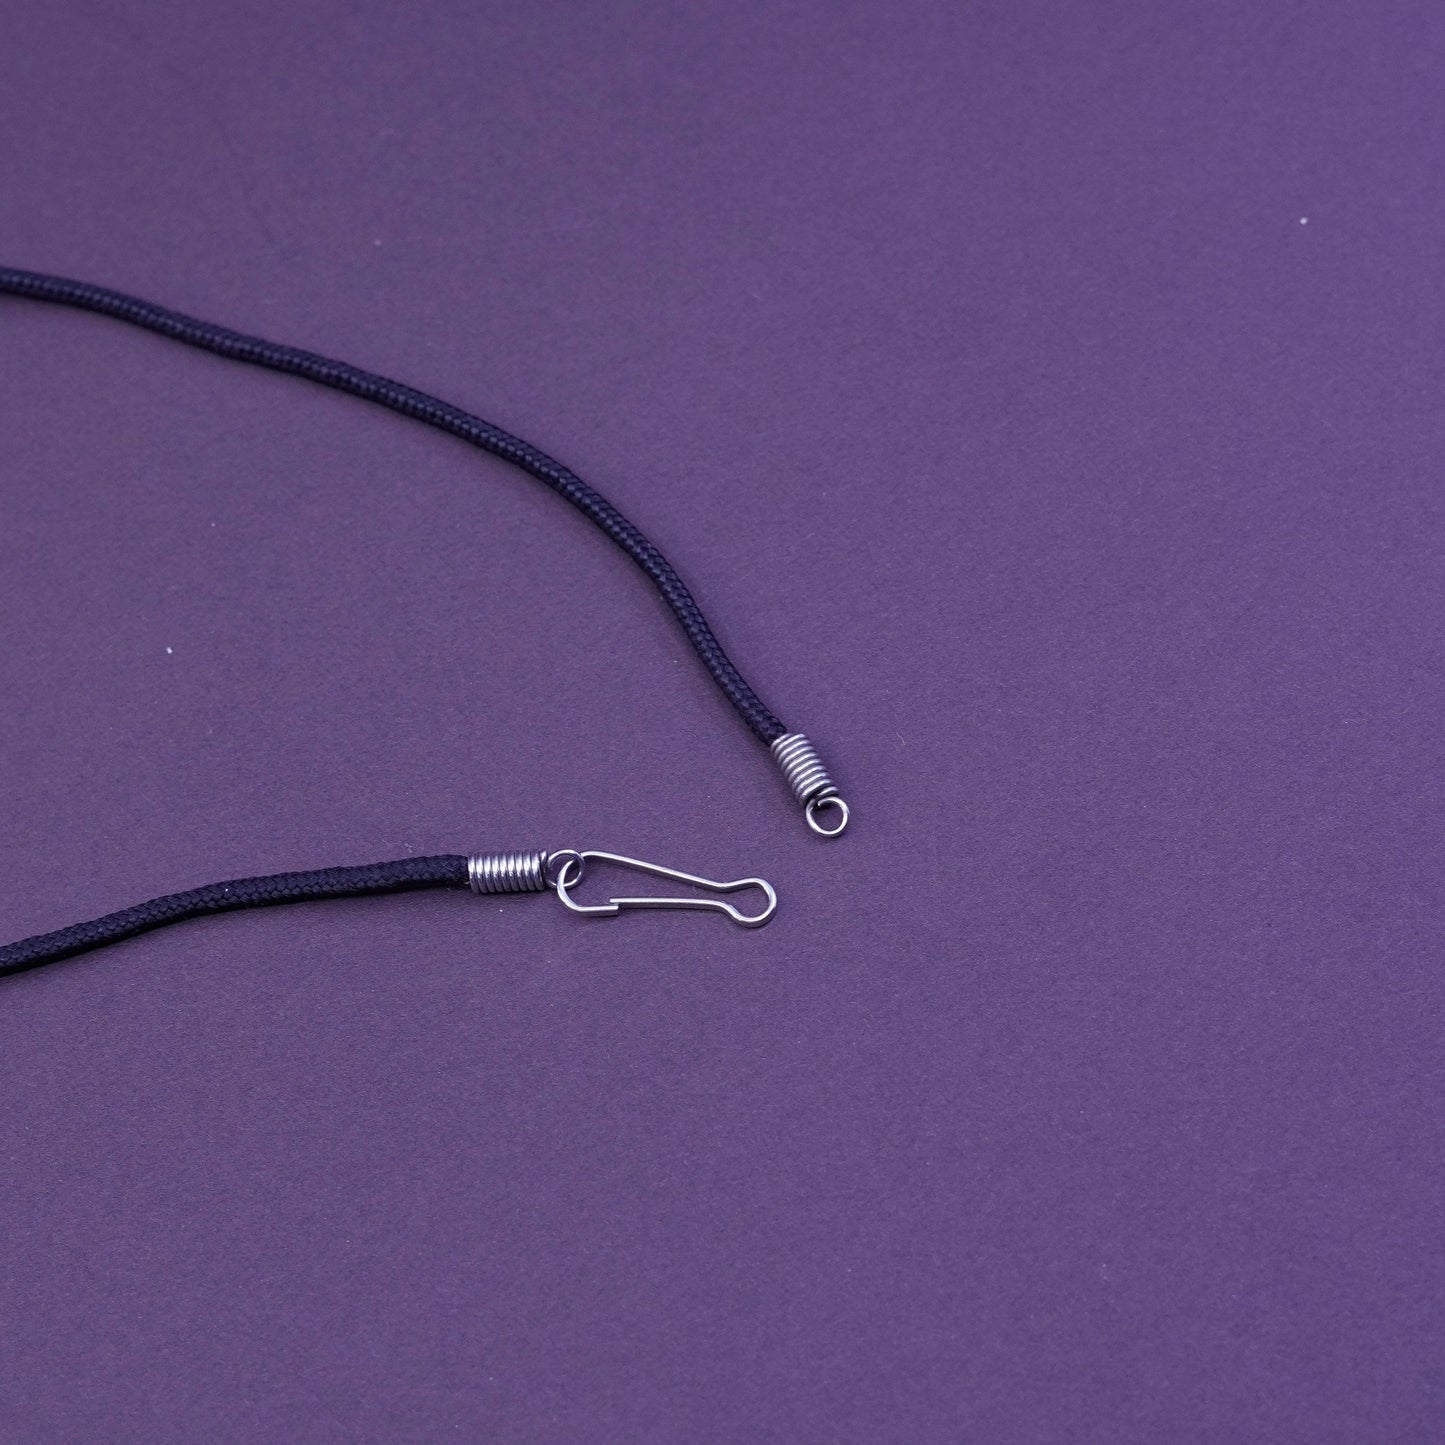 15”, handmade necklace, black woven linen thread choker sterling silver clasp